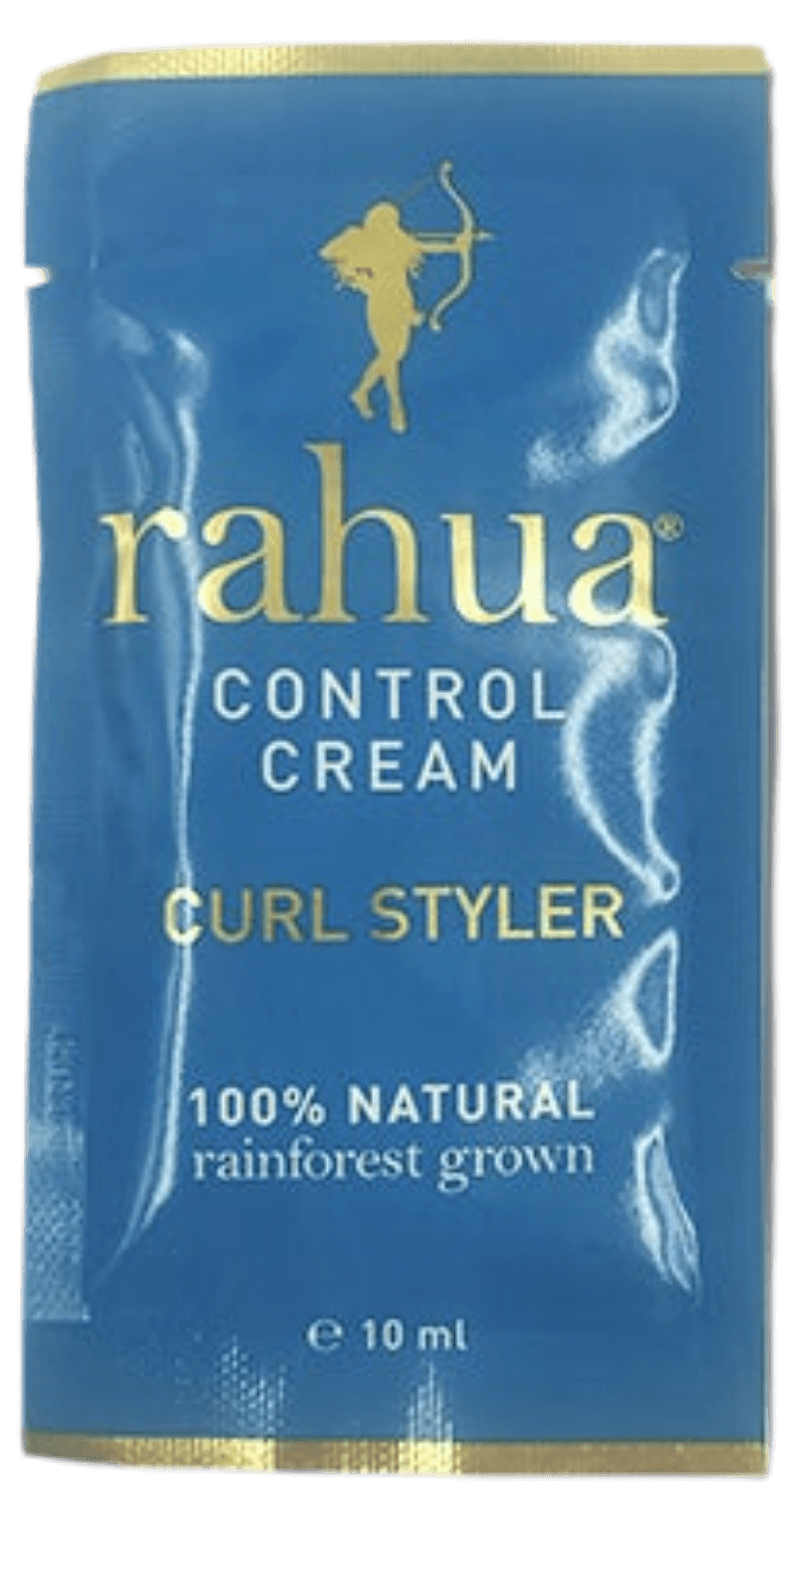 's Rahua Curl Styler Control Cream Sample - Bellini's Skin and Parfumerie 